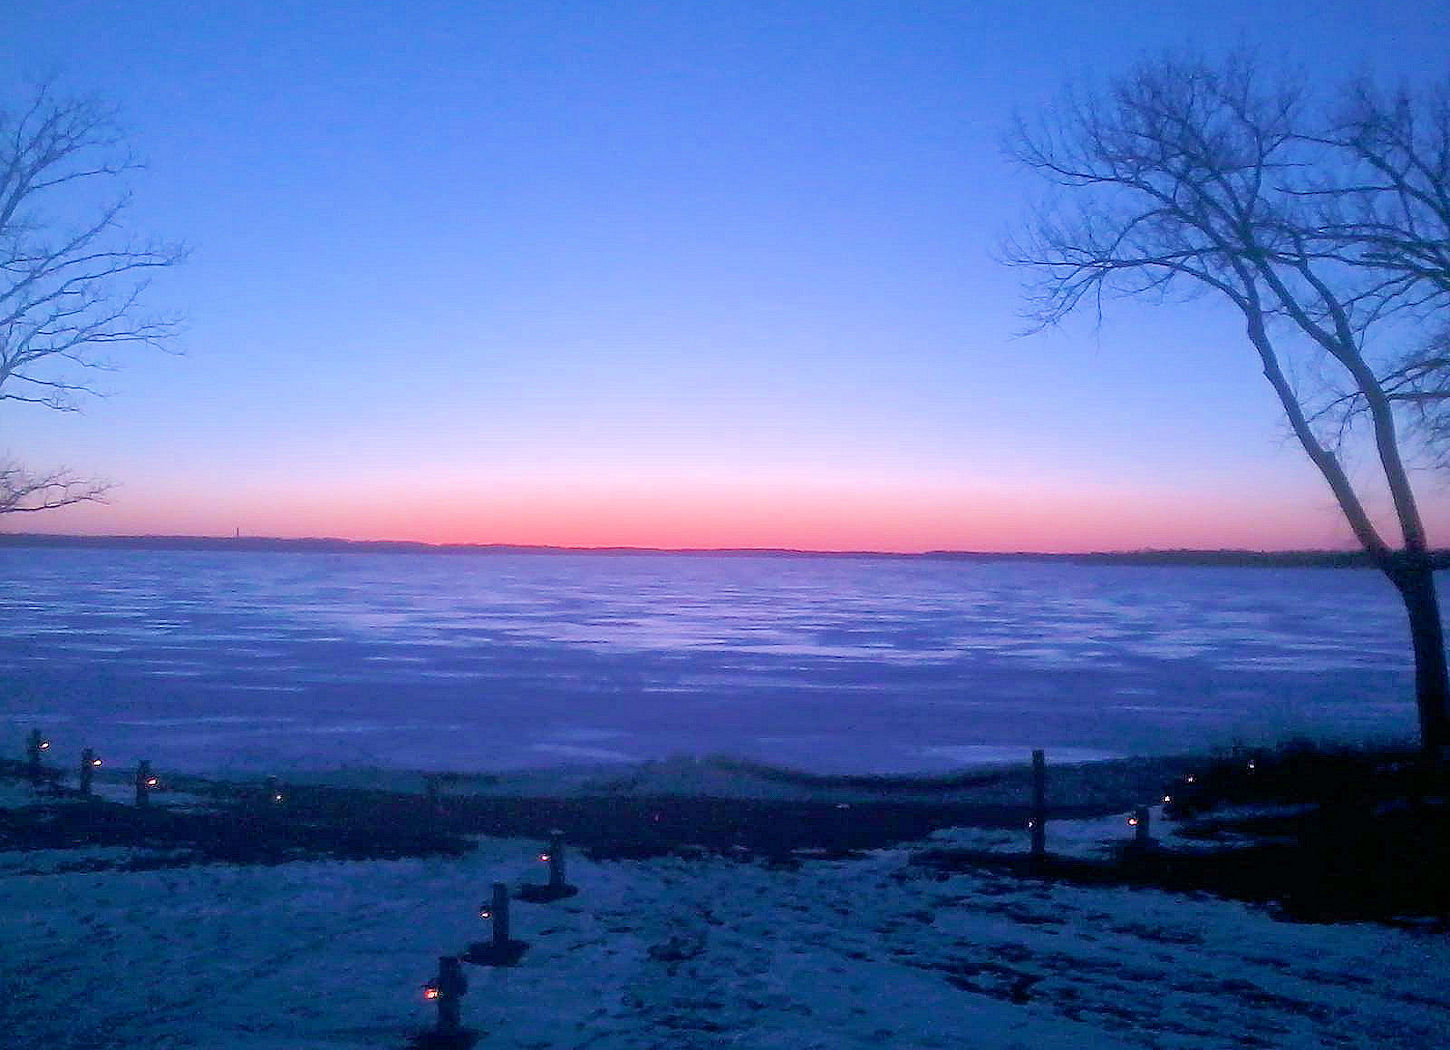 February 1, 2015 Big Detroit Lake Sunset at The Lodge on Lake Detroit